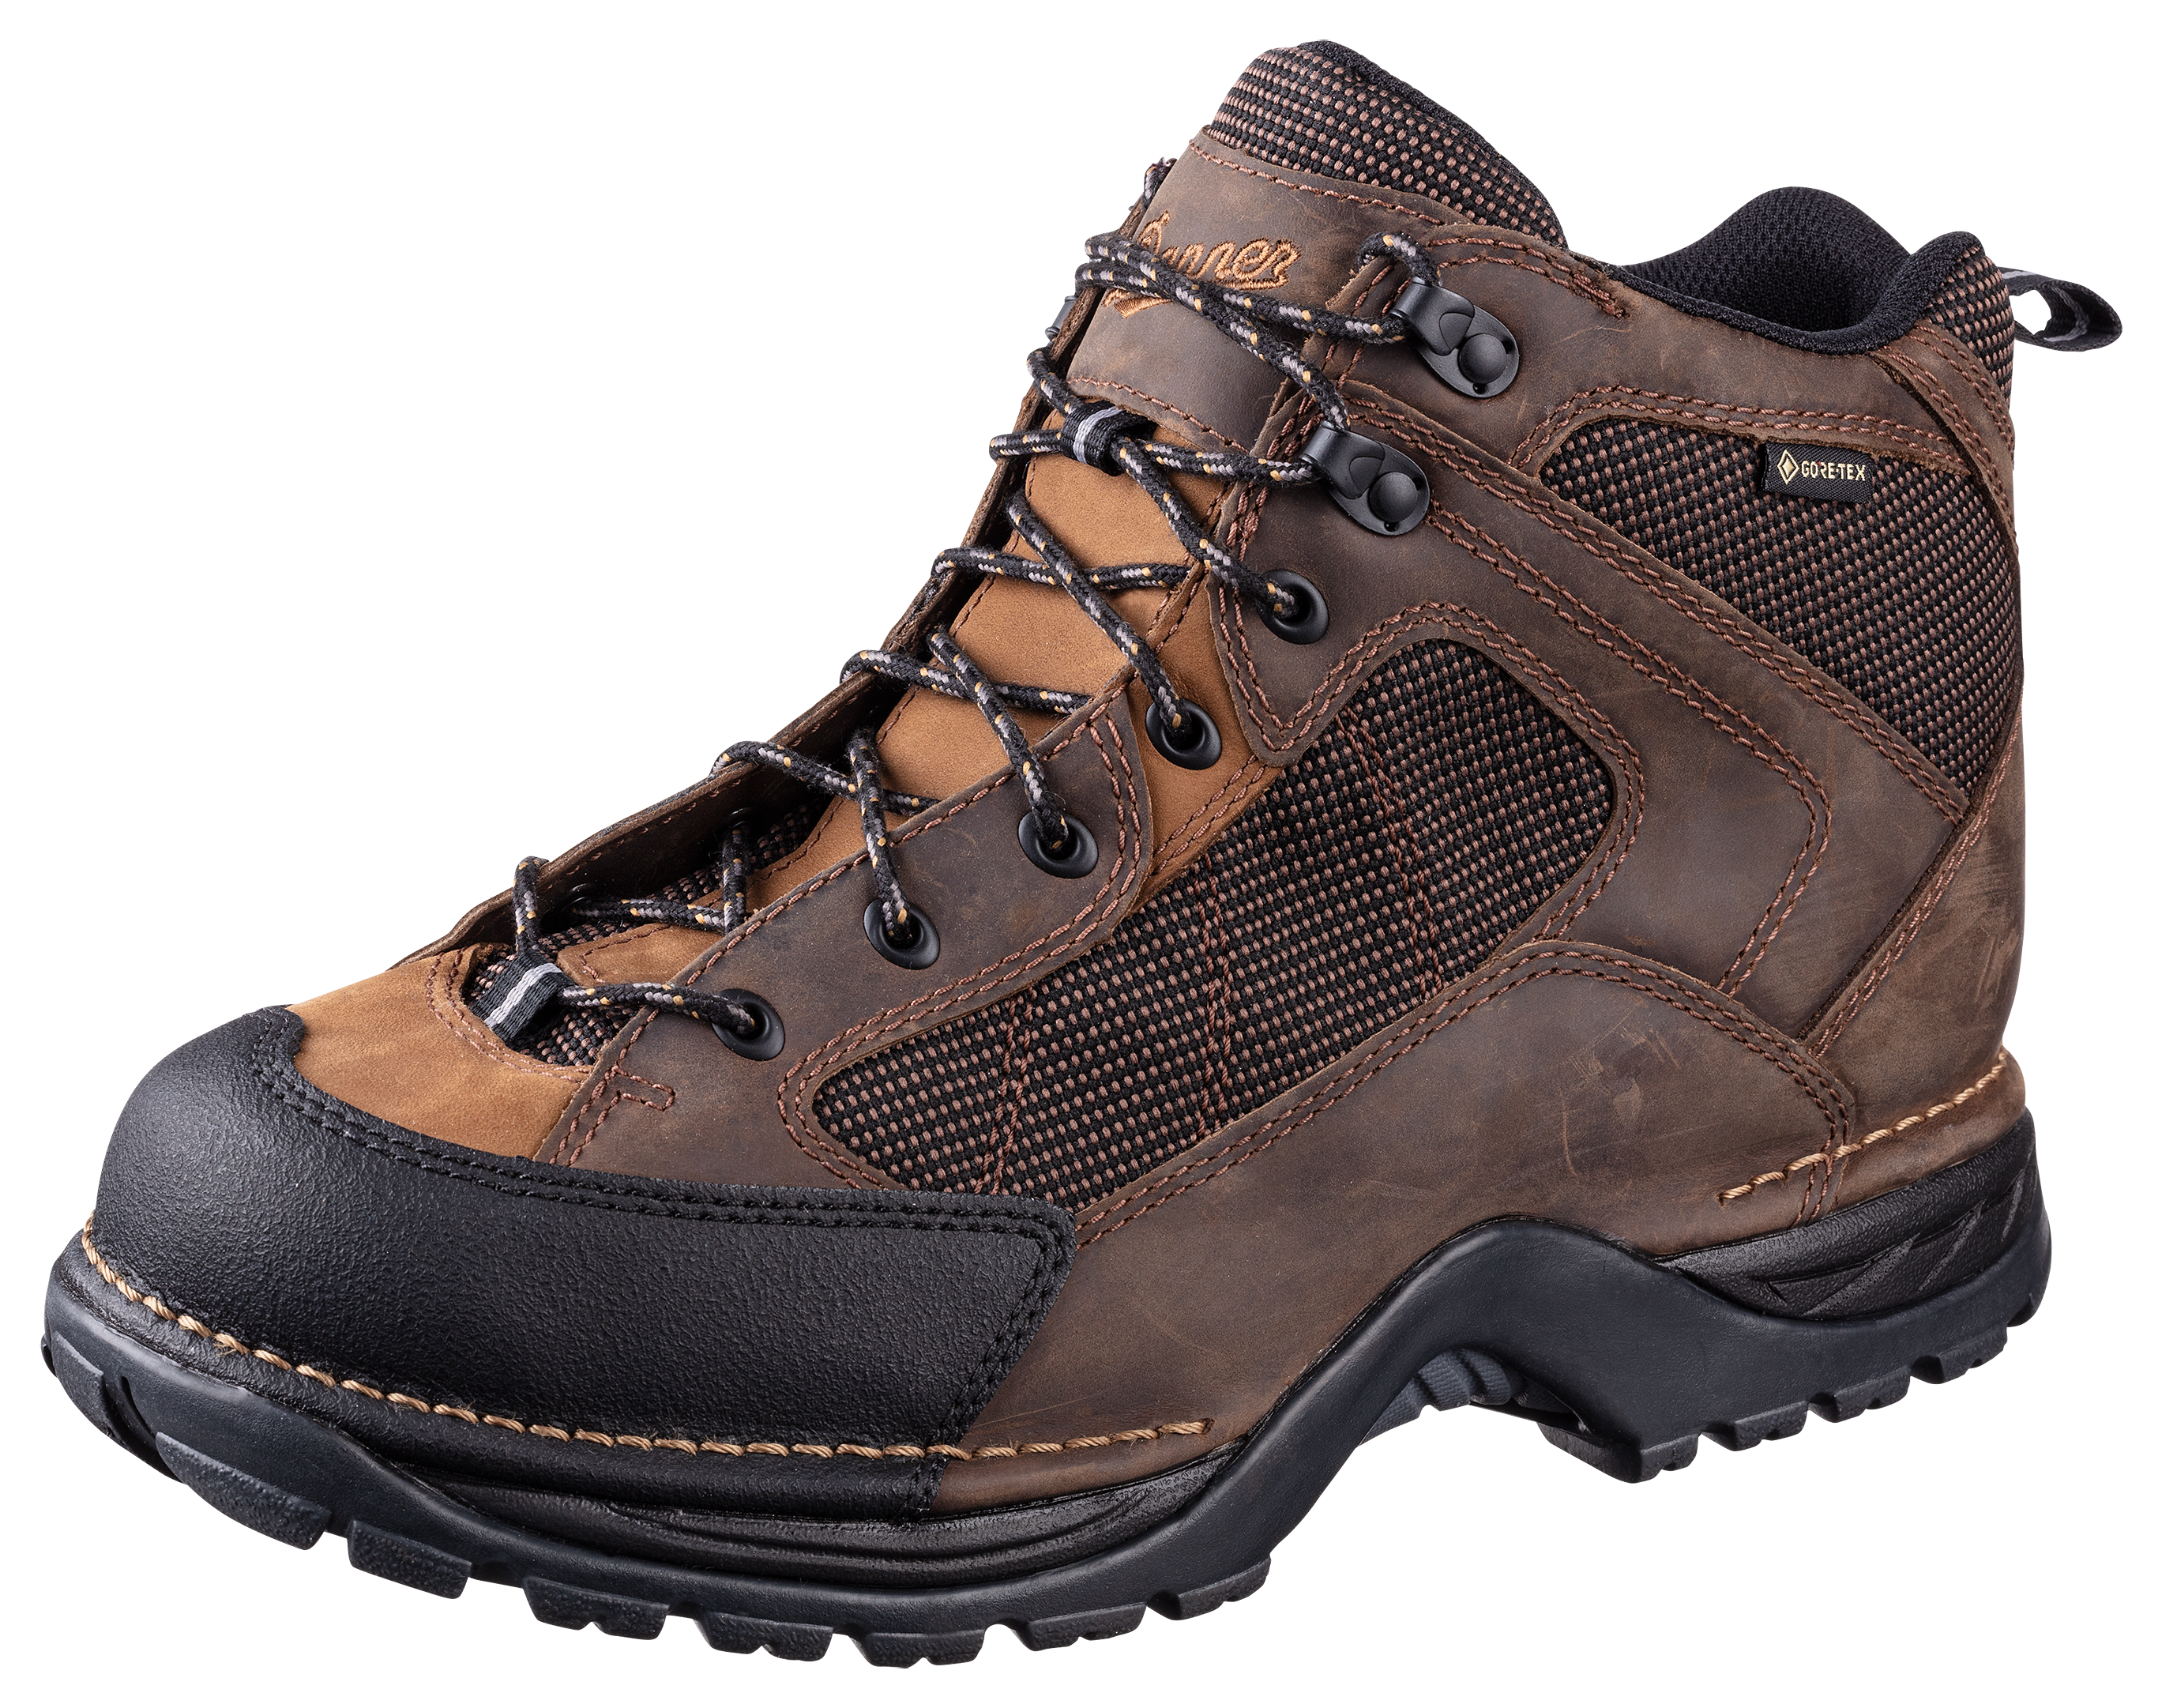 Danner Radical 452 GORE-TEX Hiking Boots for Men - Dark Brown - 11.5W